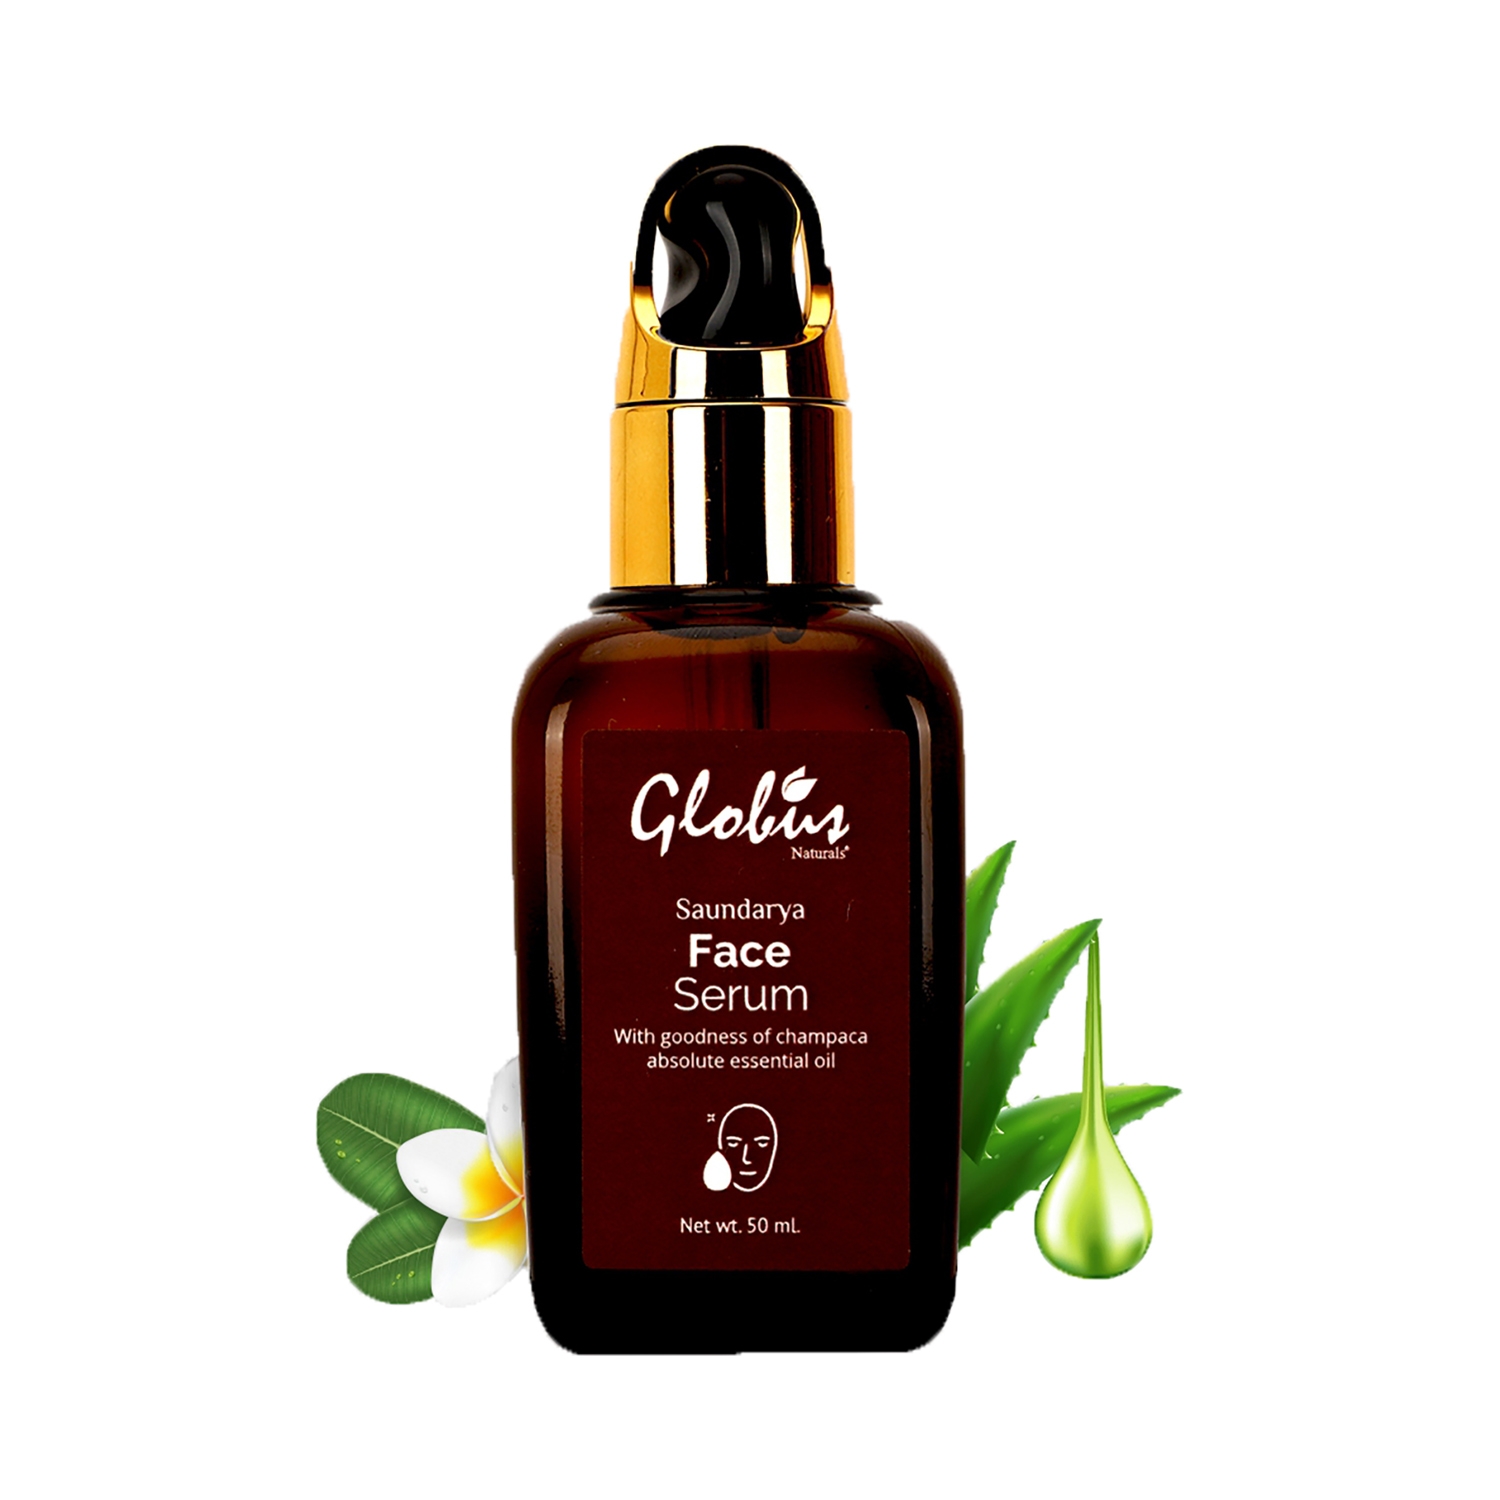 Globus Naturals Saundarya Face Serum With Goodness Of Champaca Absolute Essential Oil (30ml)